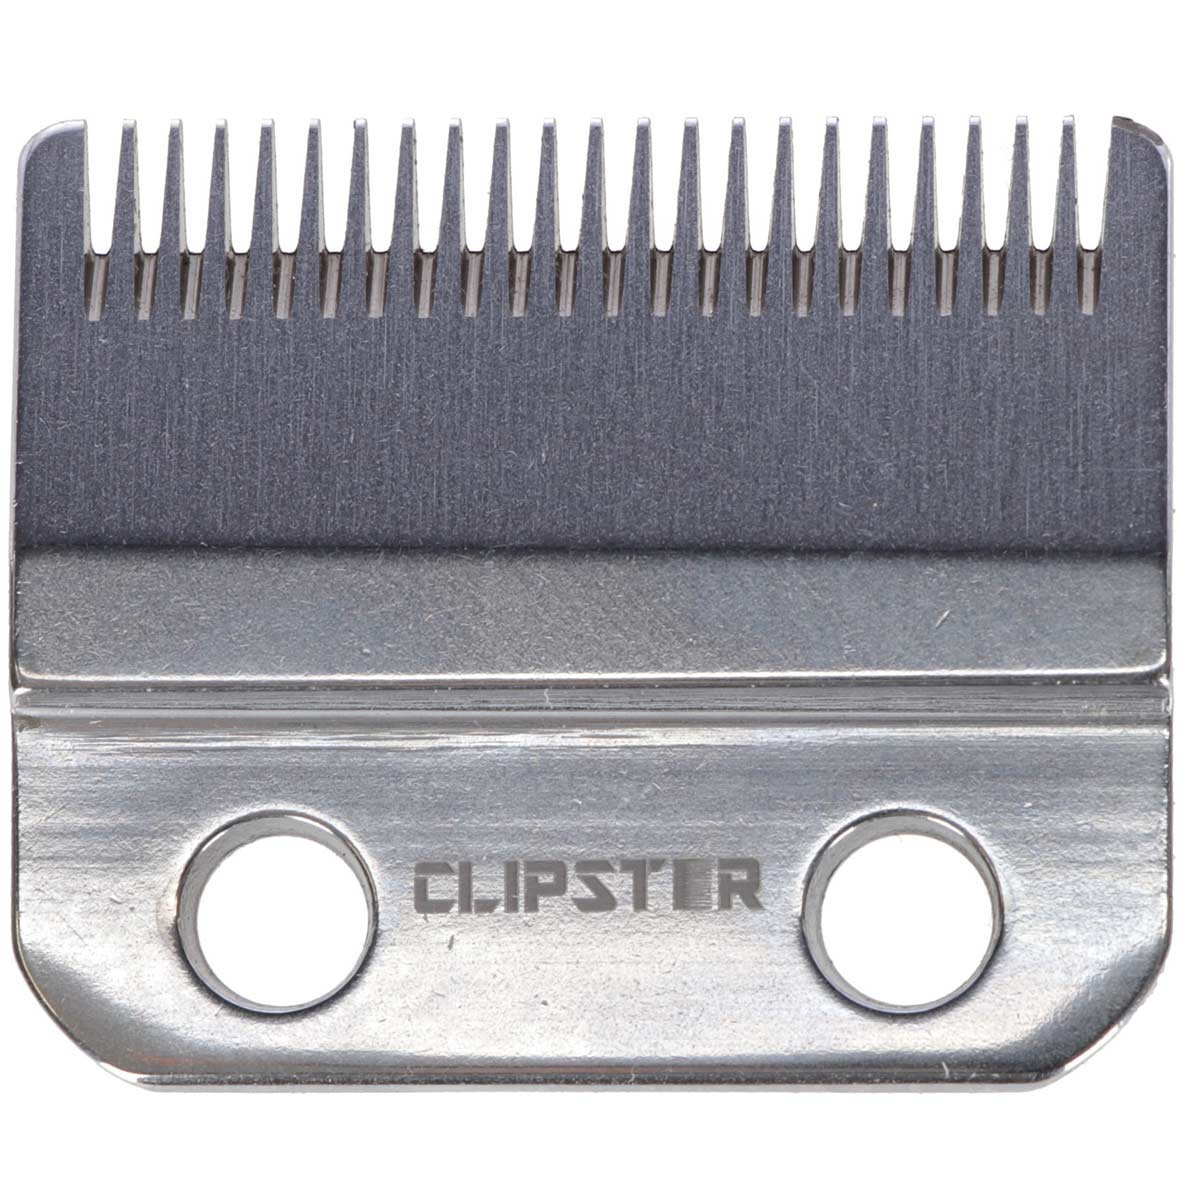 Tête de coupe Clipster pour TaproX 2.0